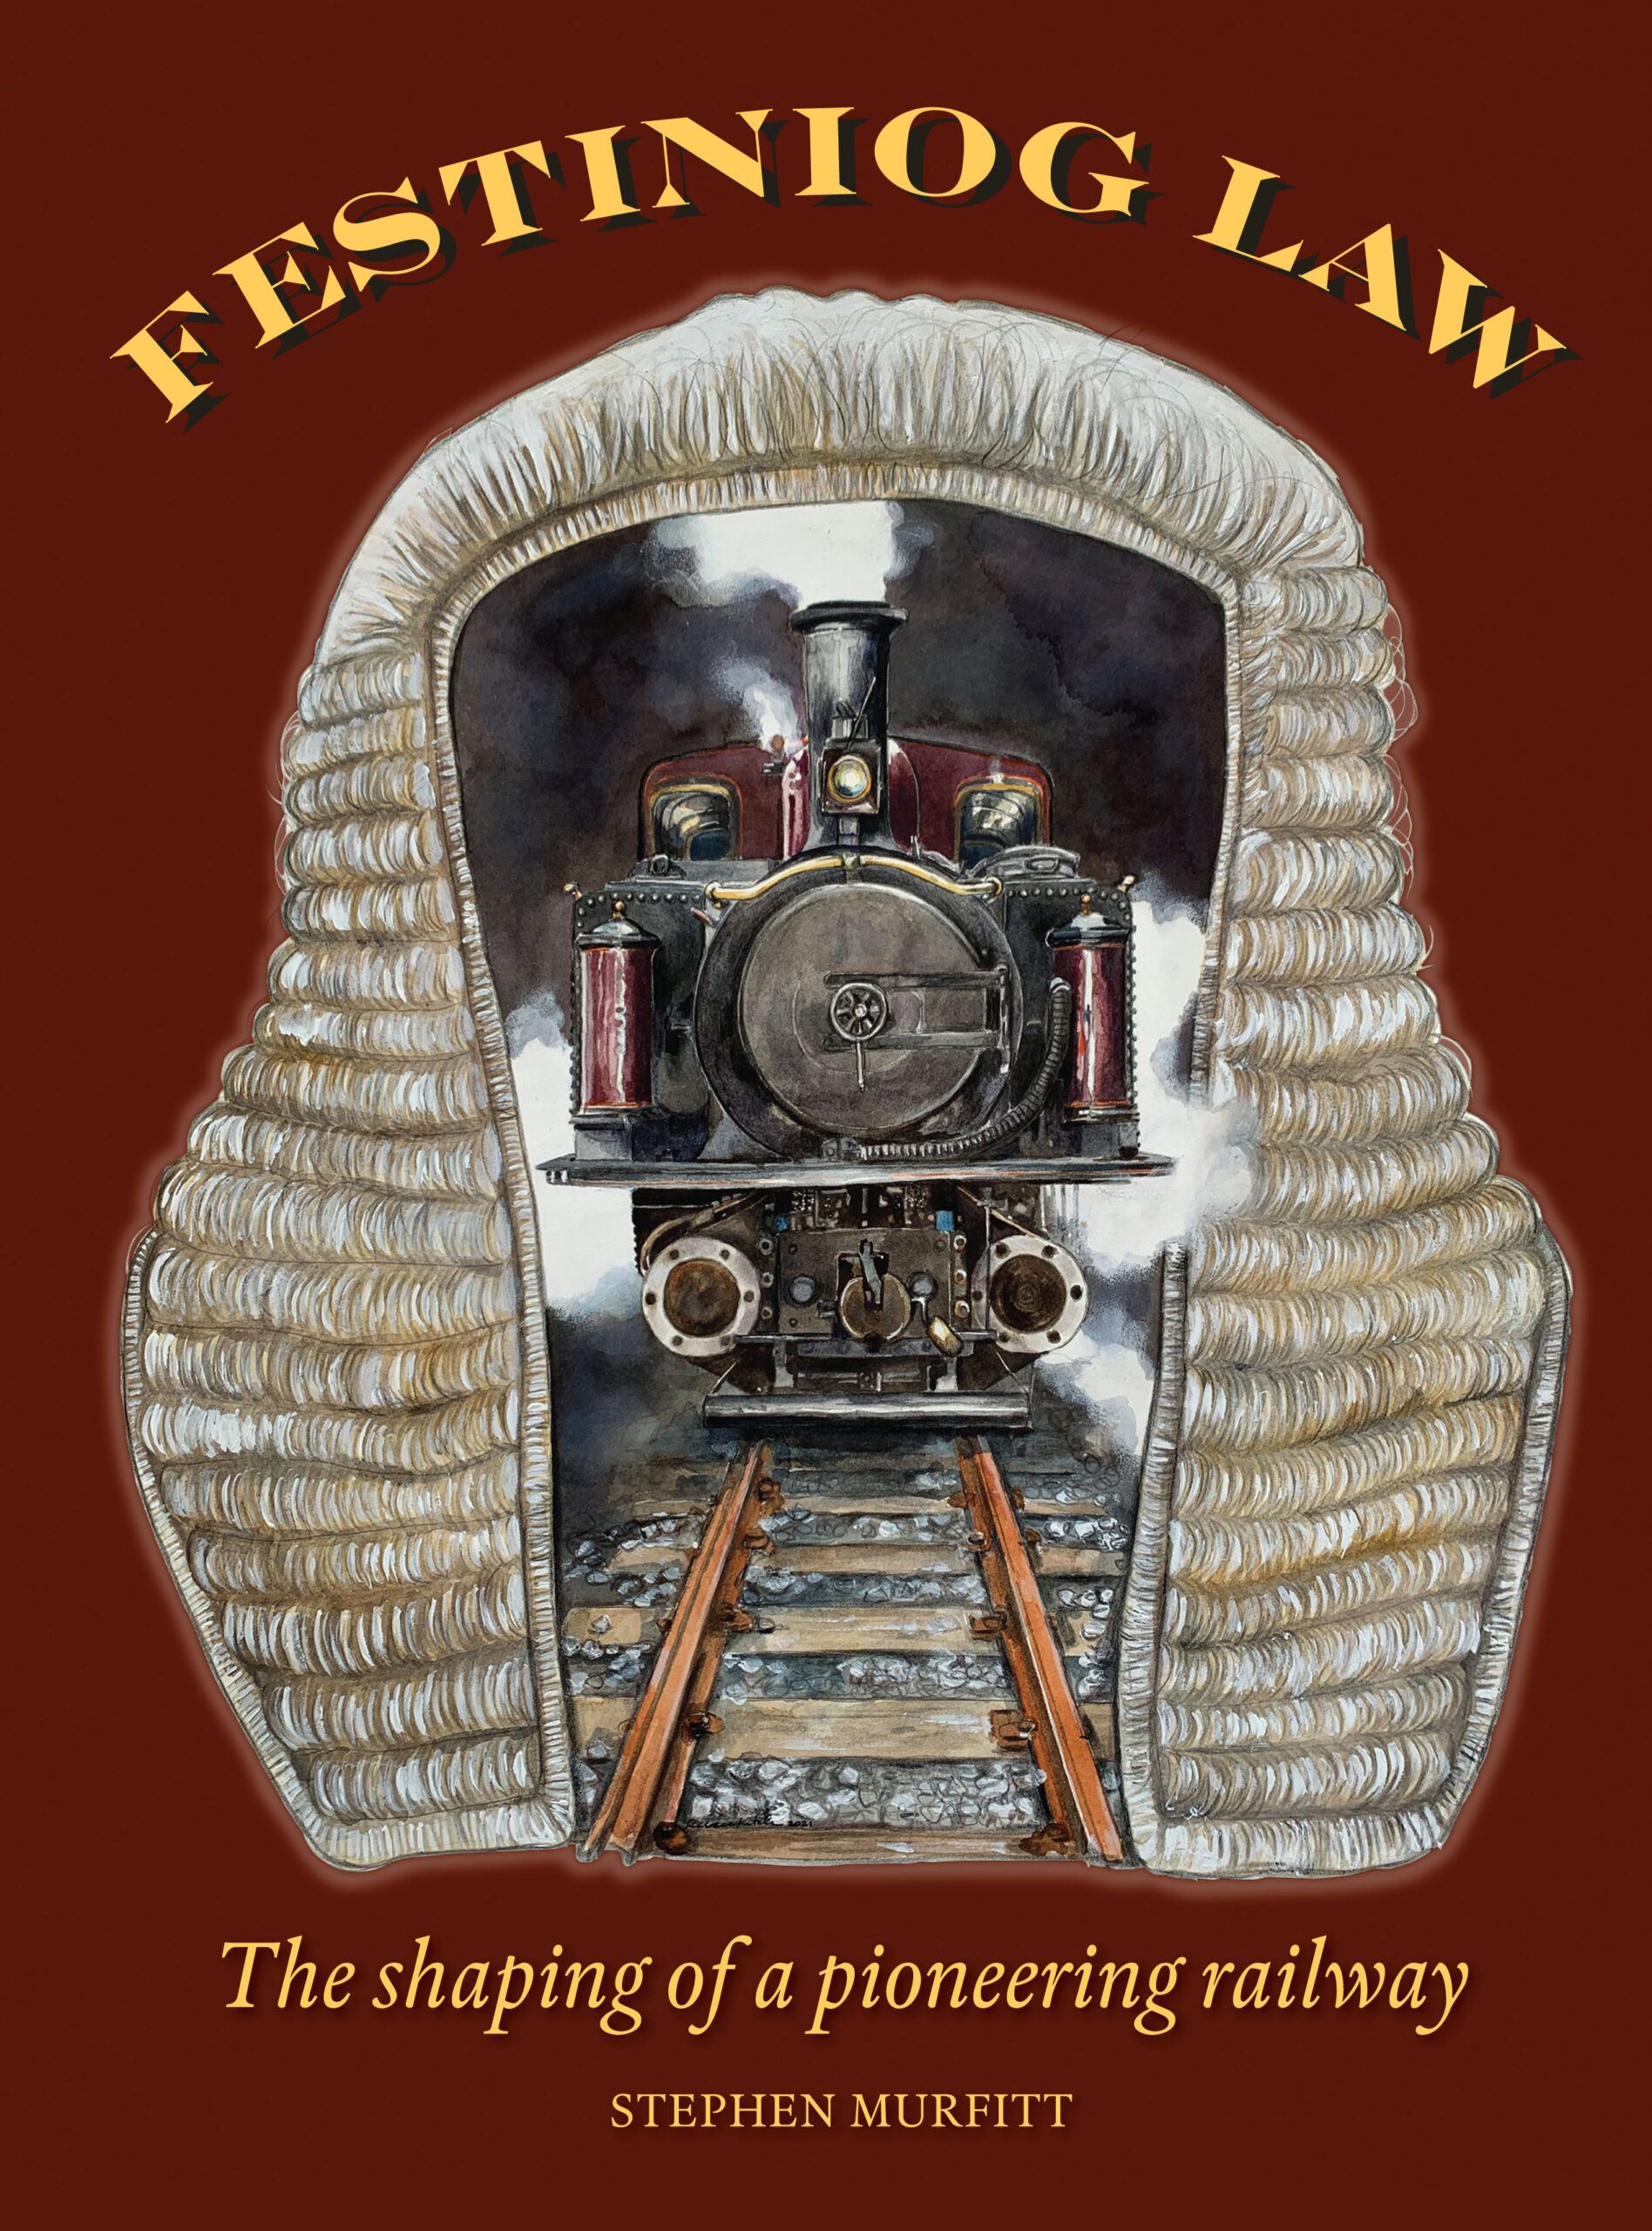 Festiniog Law – The shaping of a pioneering railway